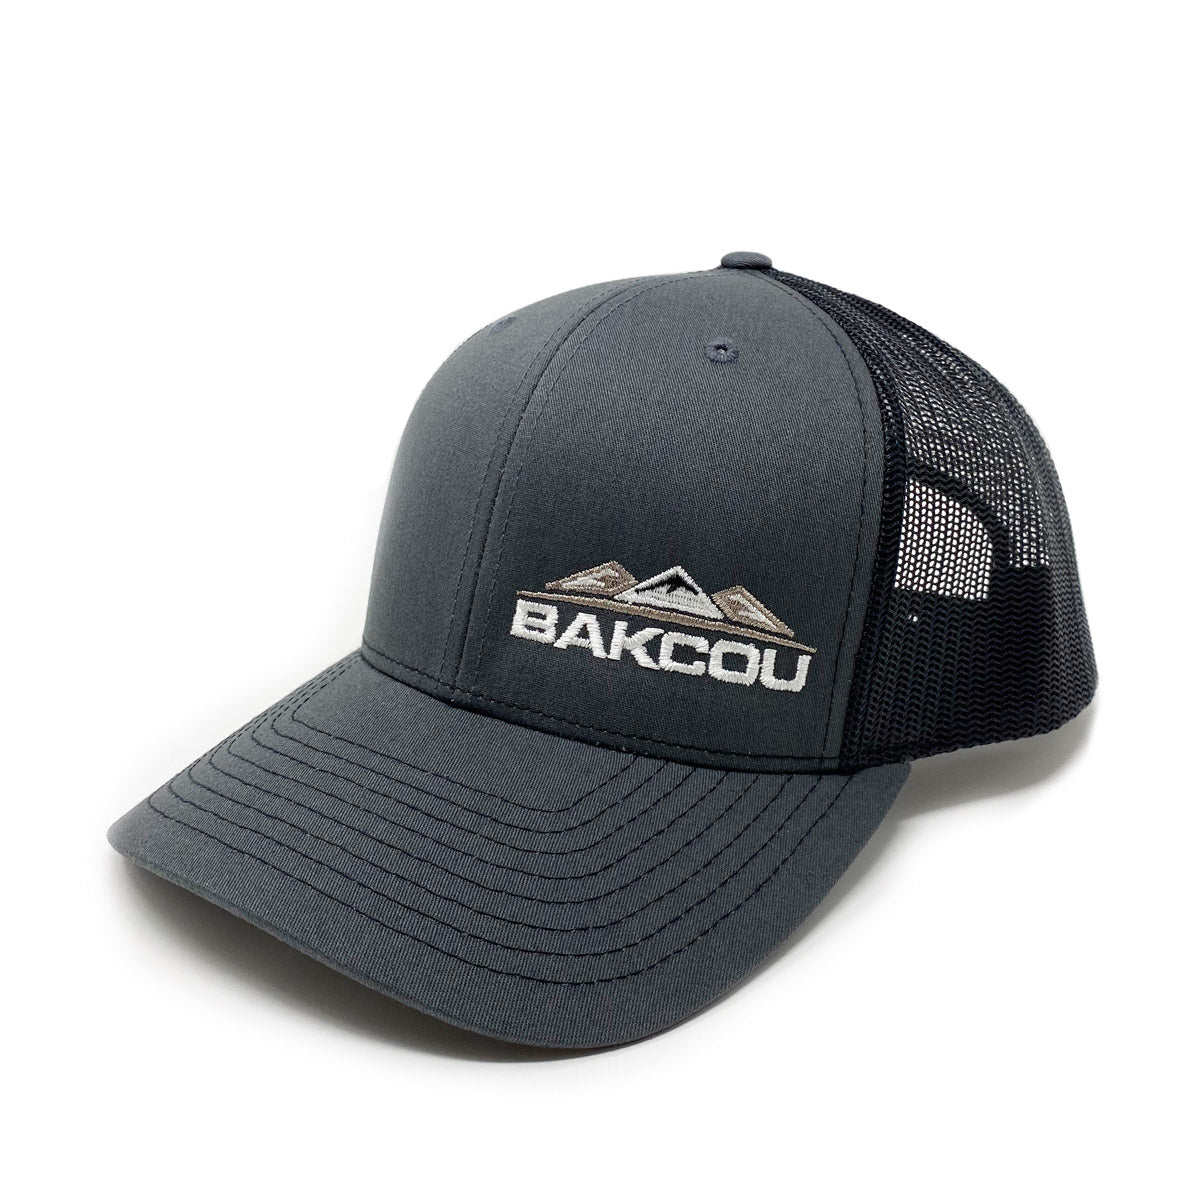 Bakcou Trucker Hat - Bakcou